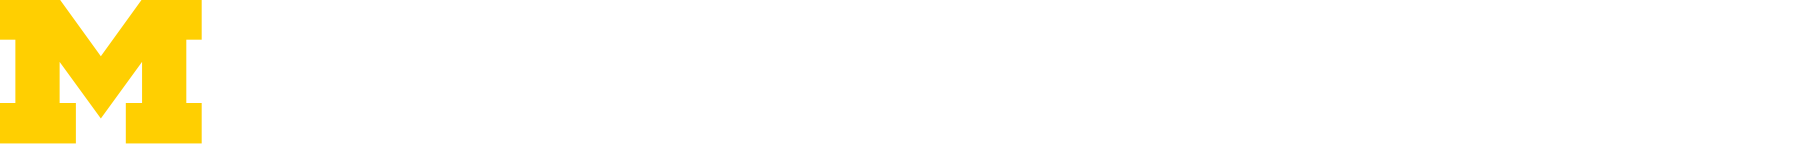 Mechanics and Physics of Disordered Media logo